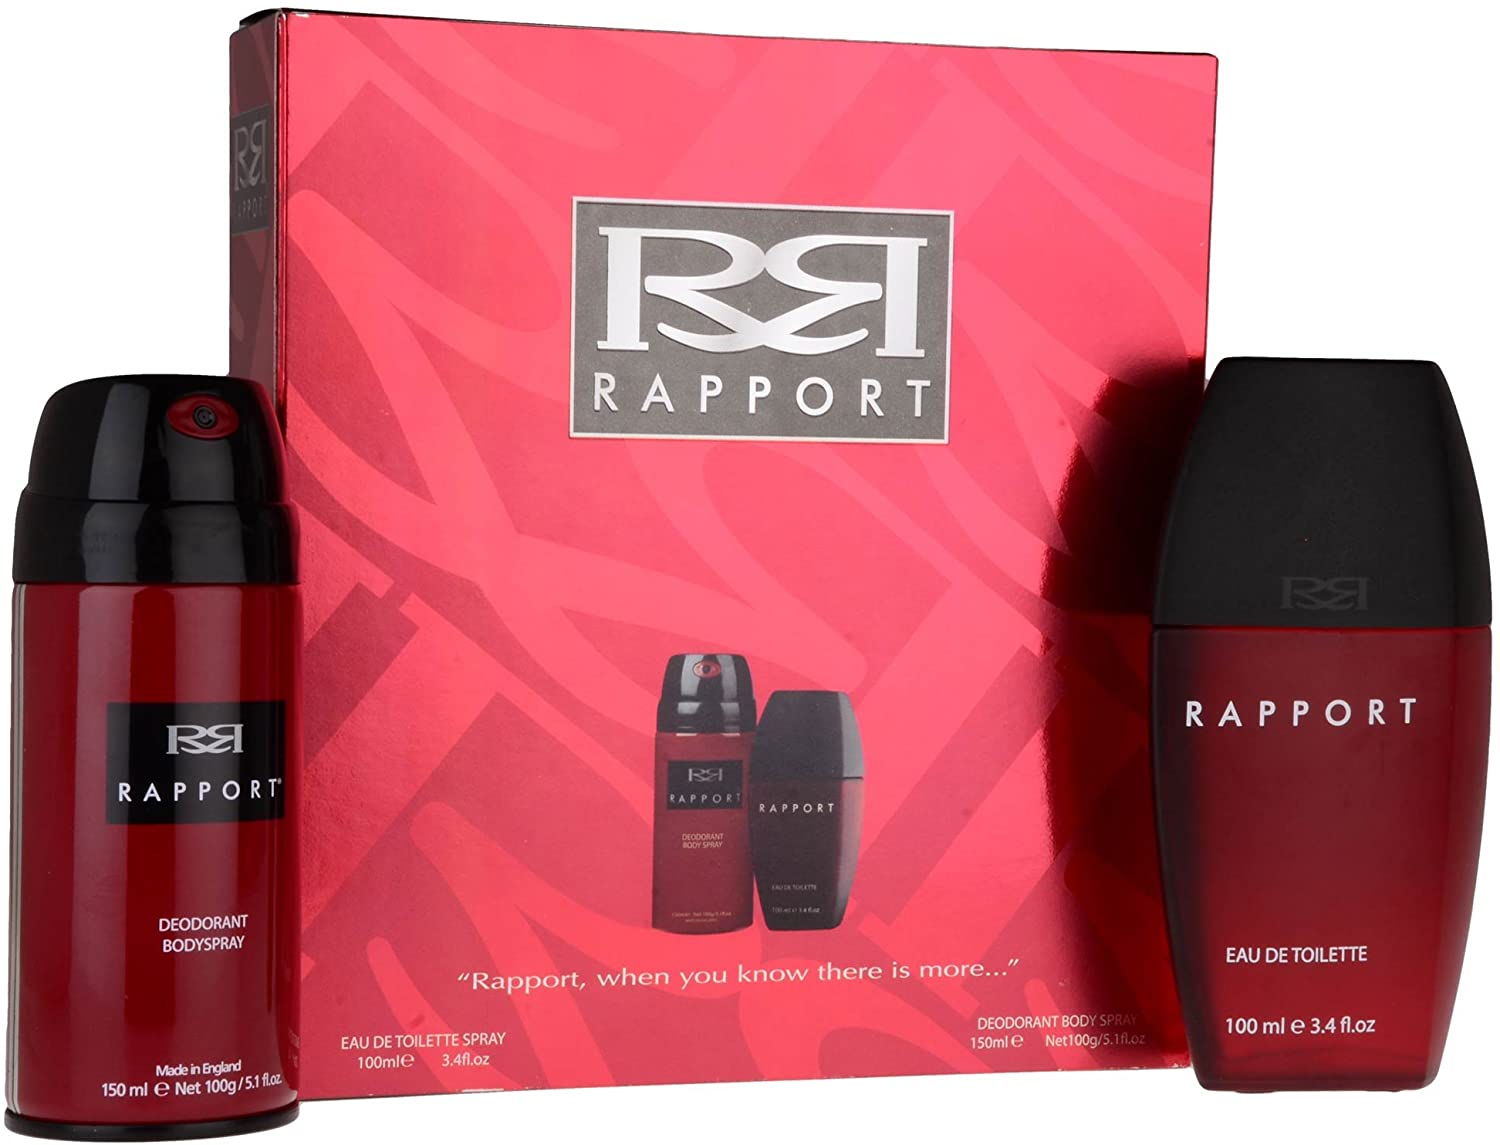 RAPPORT Perfume range at THE PERFUME WORLD